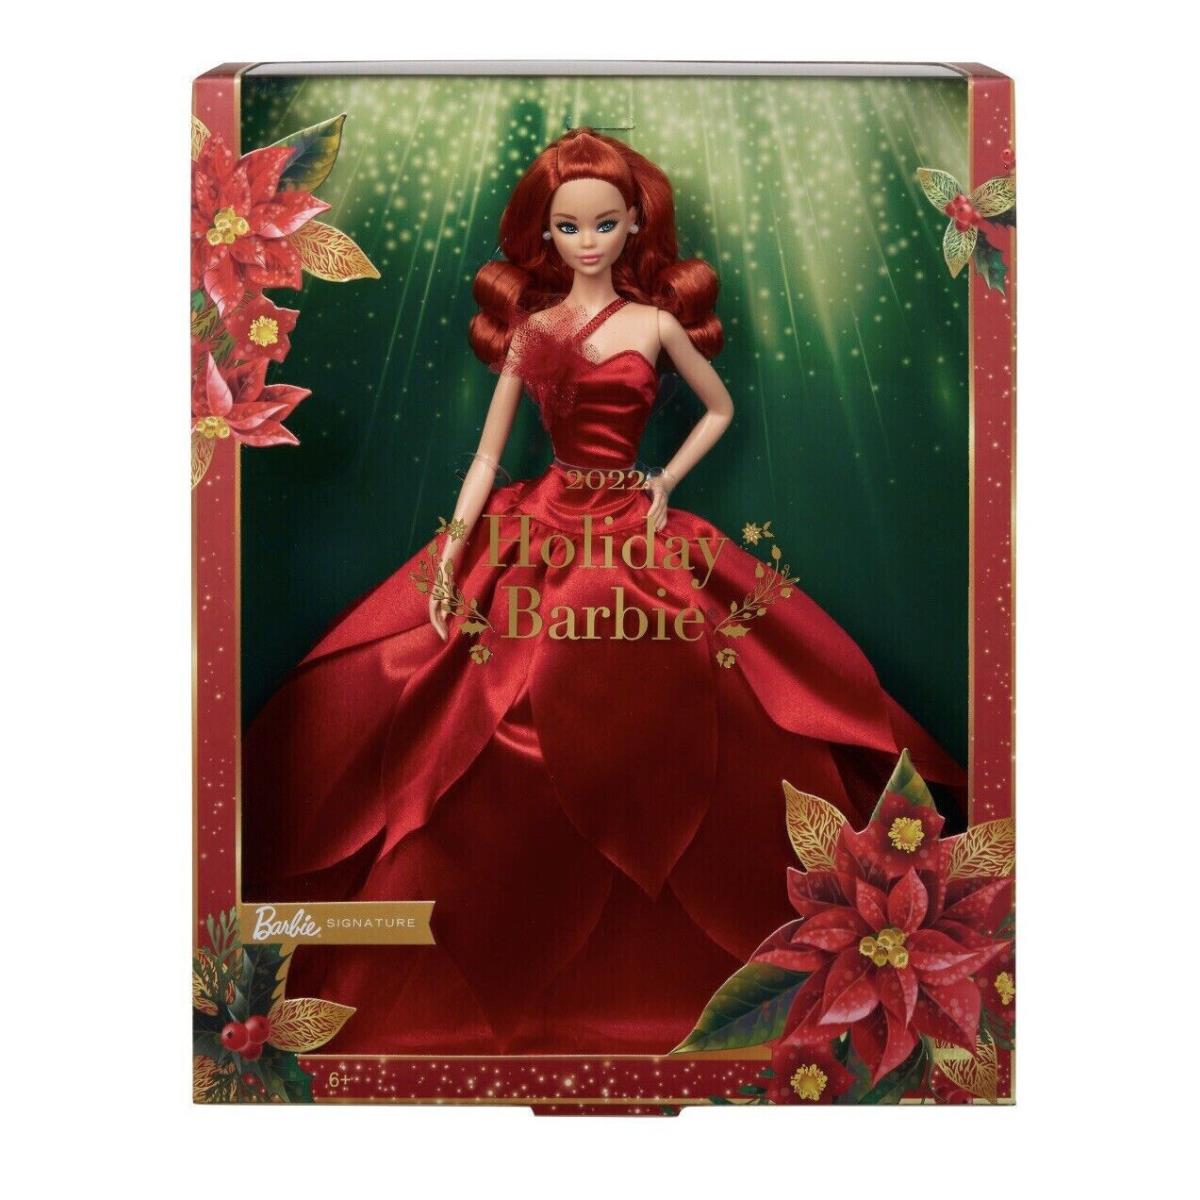 2022 Holiday Barbie Red Hair - Walmart Exclusive - Nrfb - HGW73